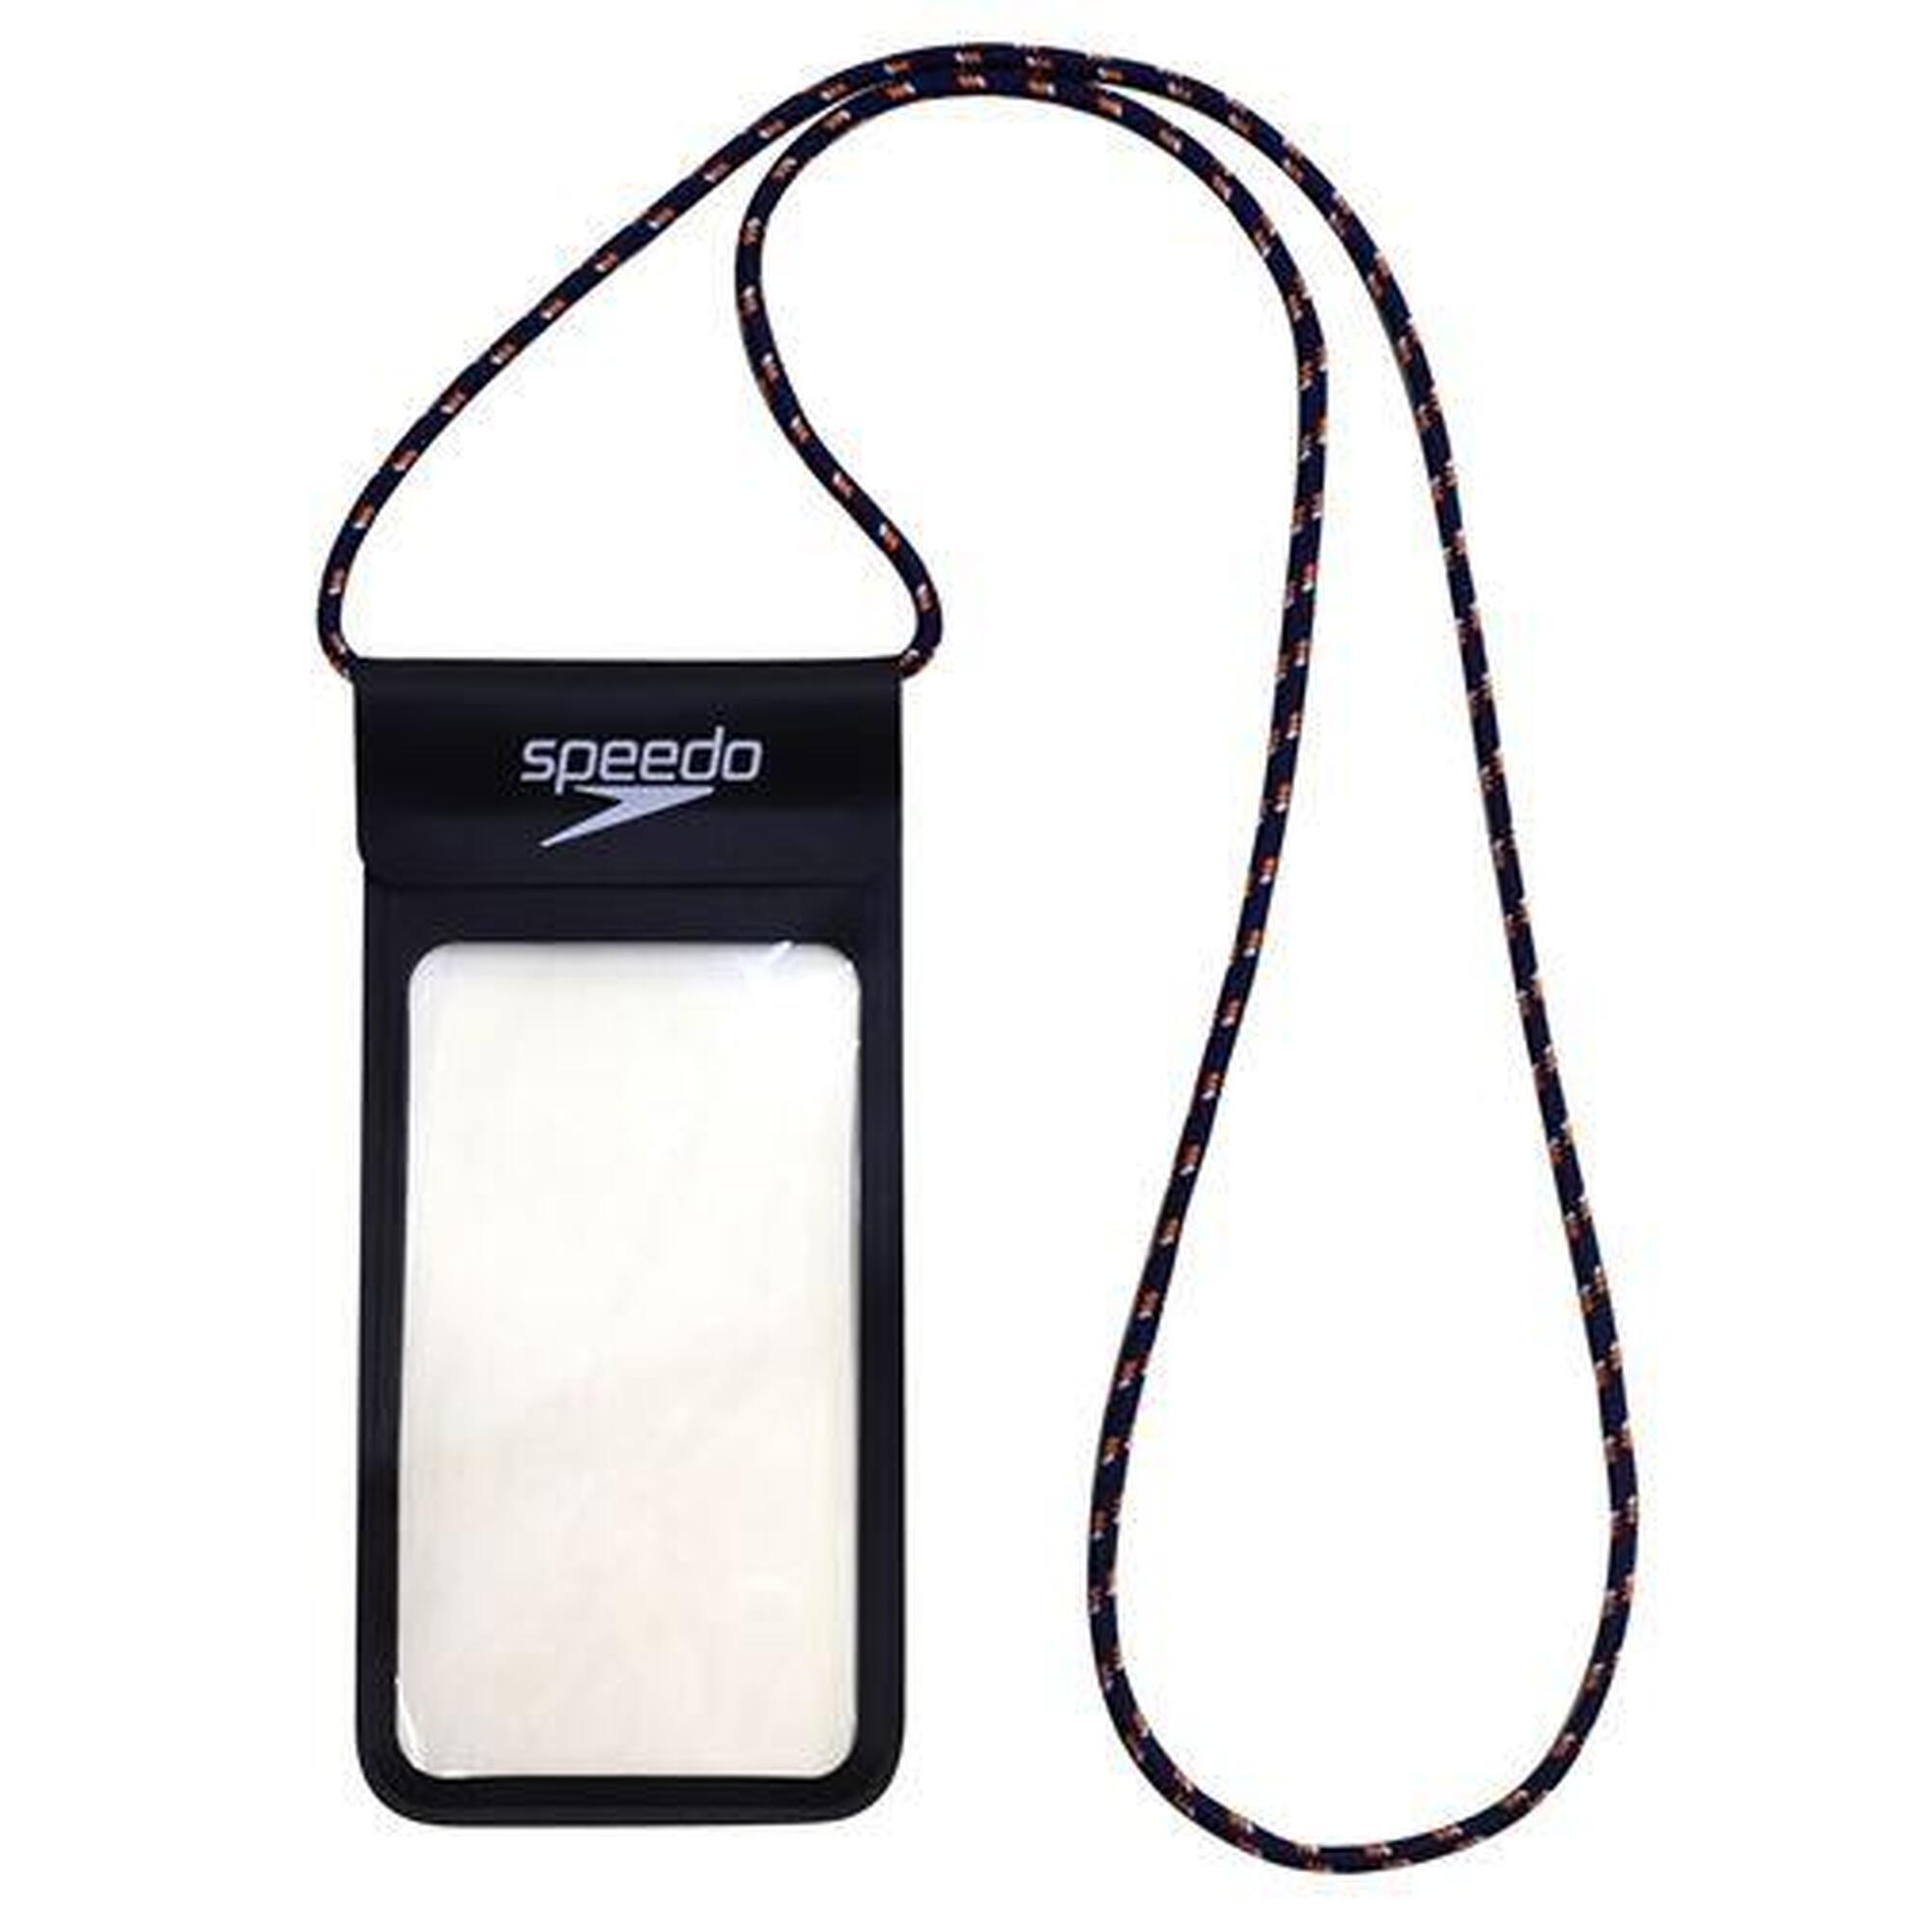 Unisex Cell Phone Bag 7 Inch - Black